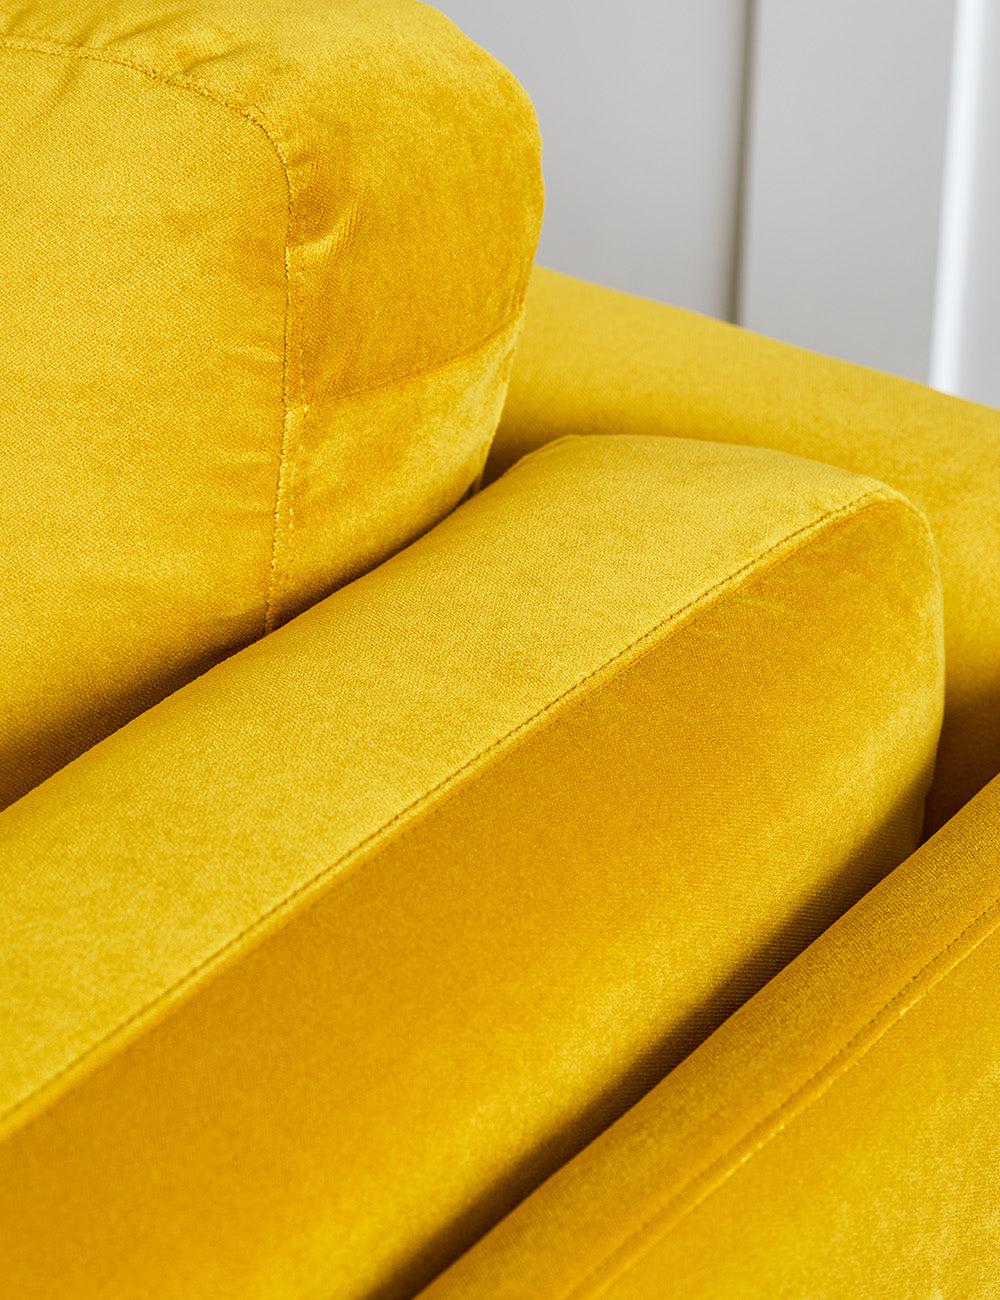 Dulwich Sofa 3 Seater in Clever Velvet Mustard